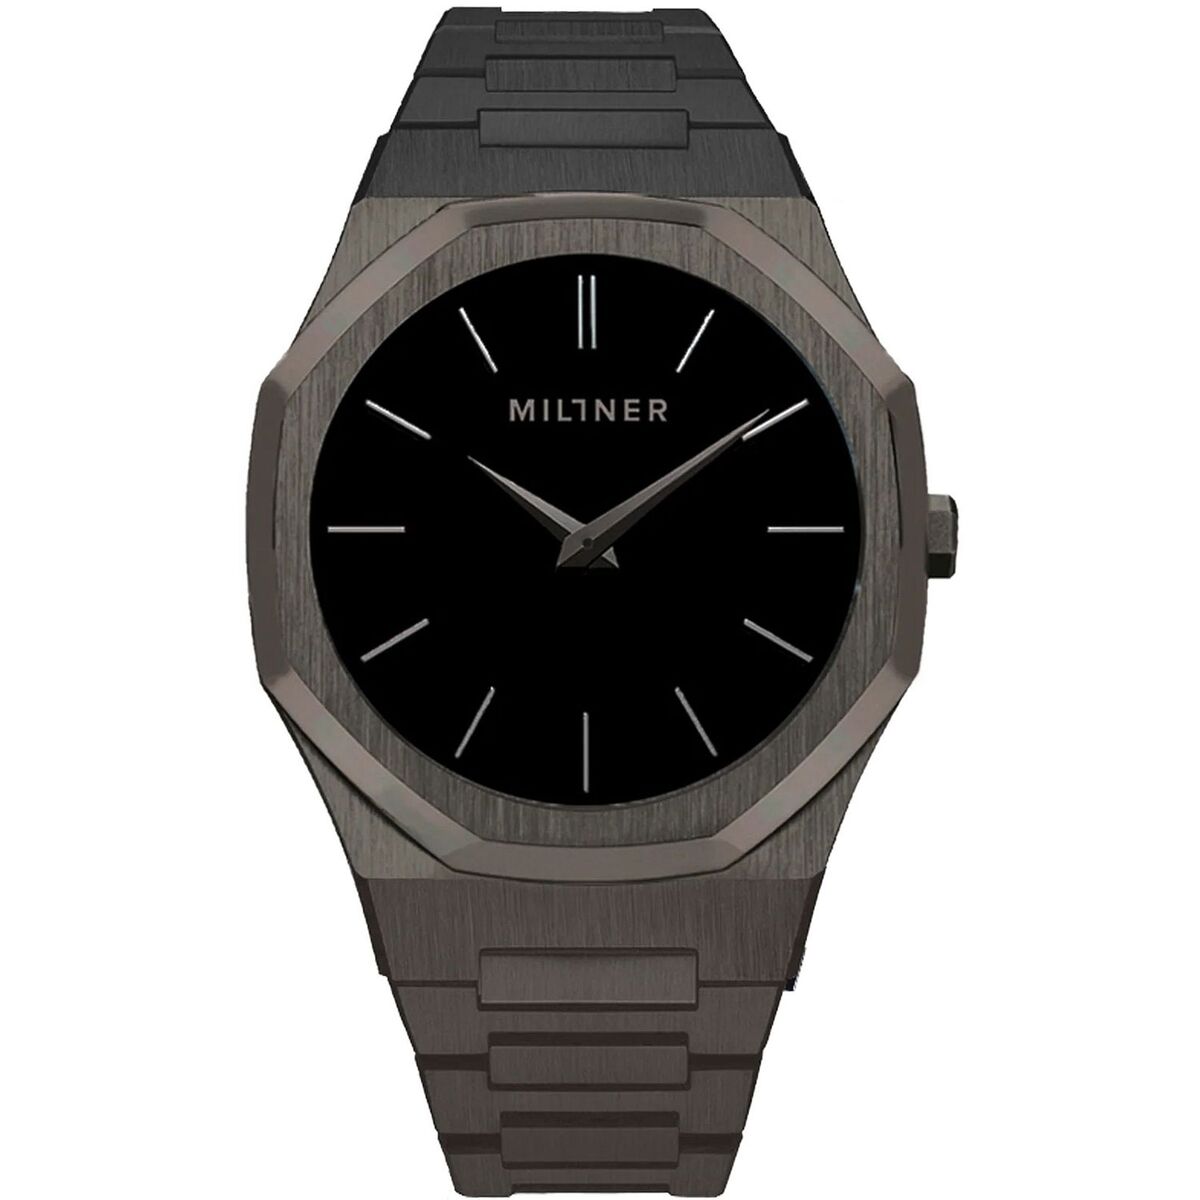 Kaufe Unisex-Uhr Millner OXFORD FULL BLACK bei AWK Flagship um € 73.00